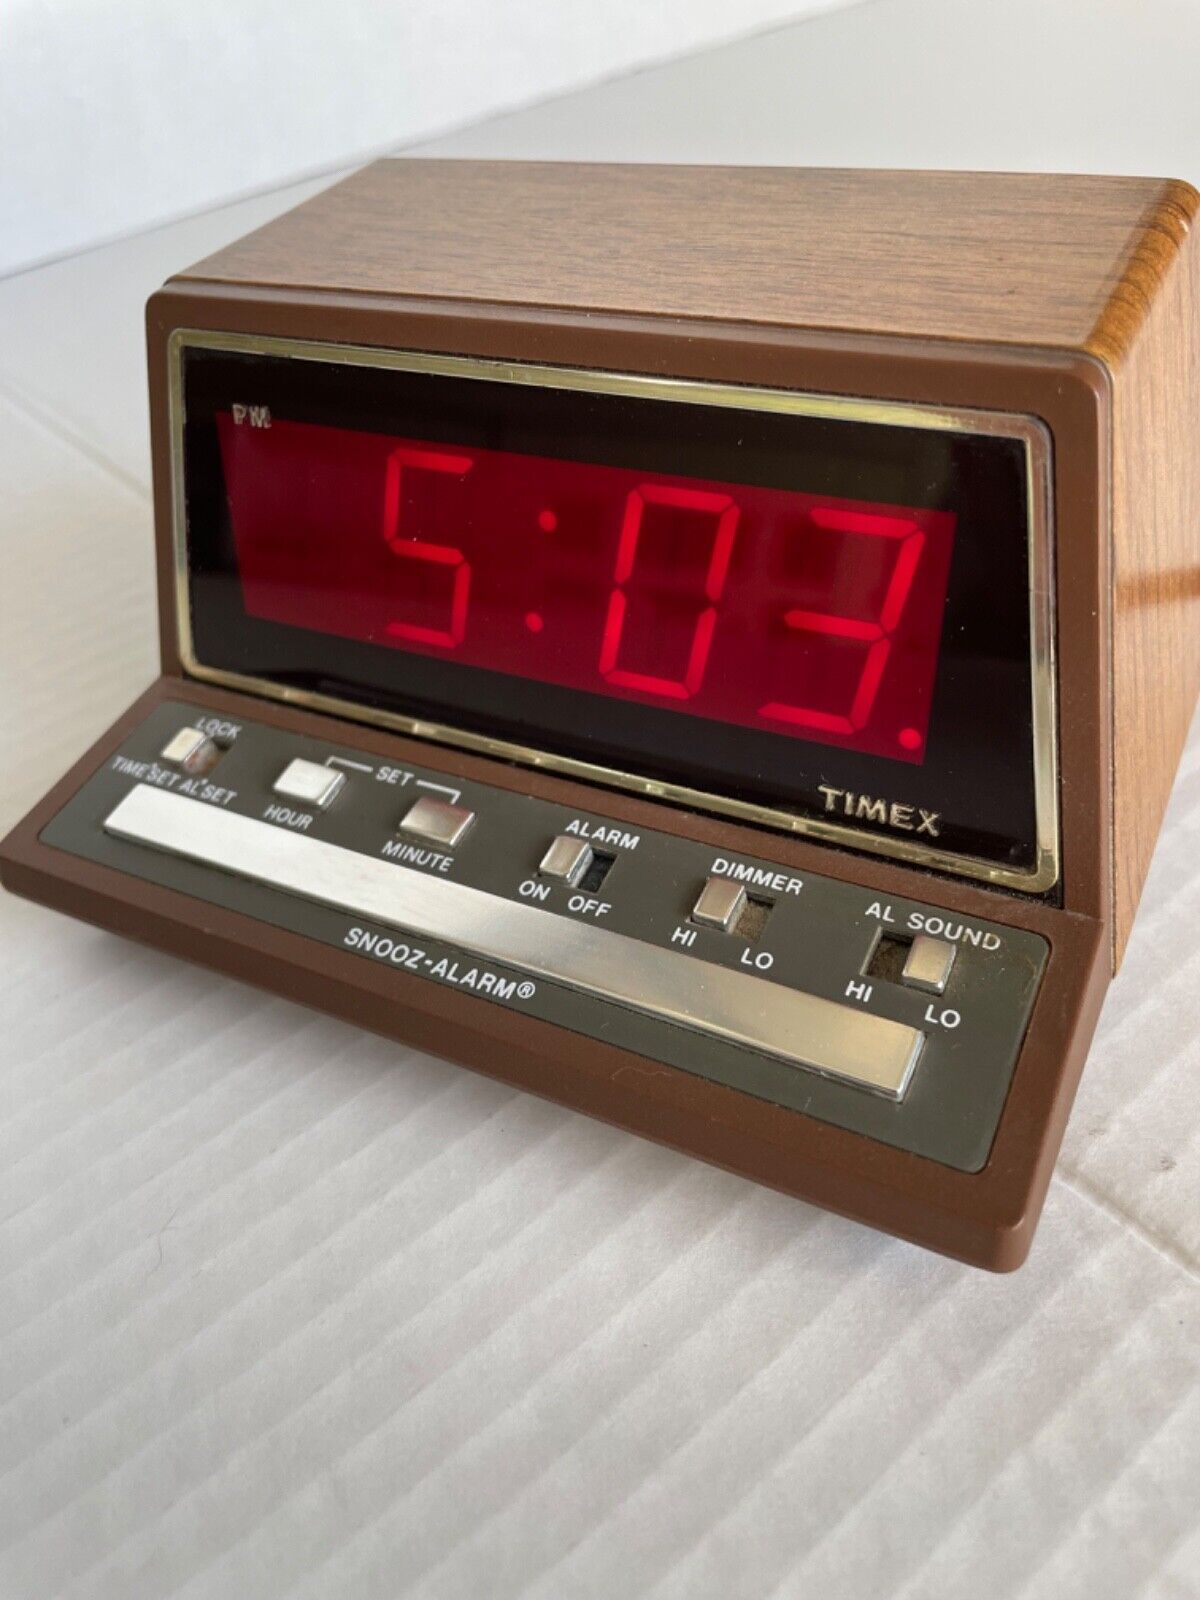 Vintage Digital Timex Alarm Clock Model 5208-5 Wood-grain Made In Japan Tested.